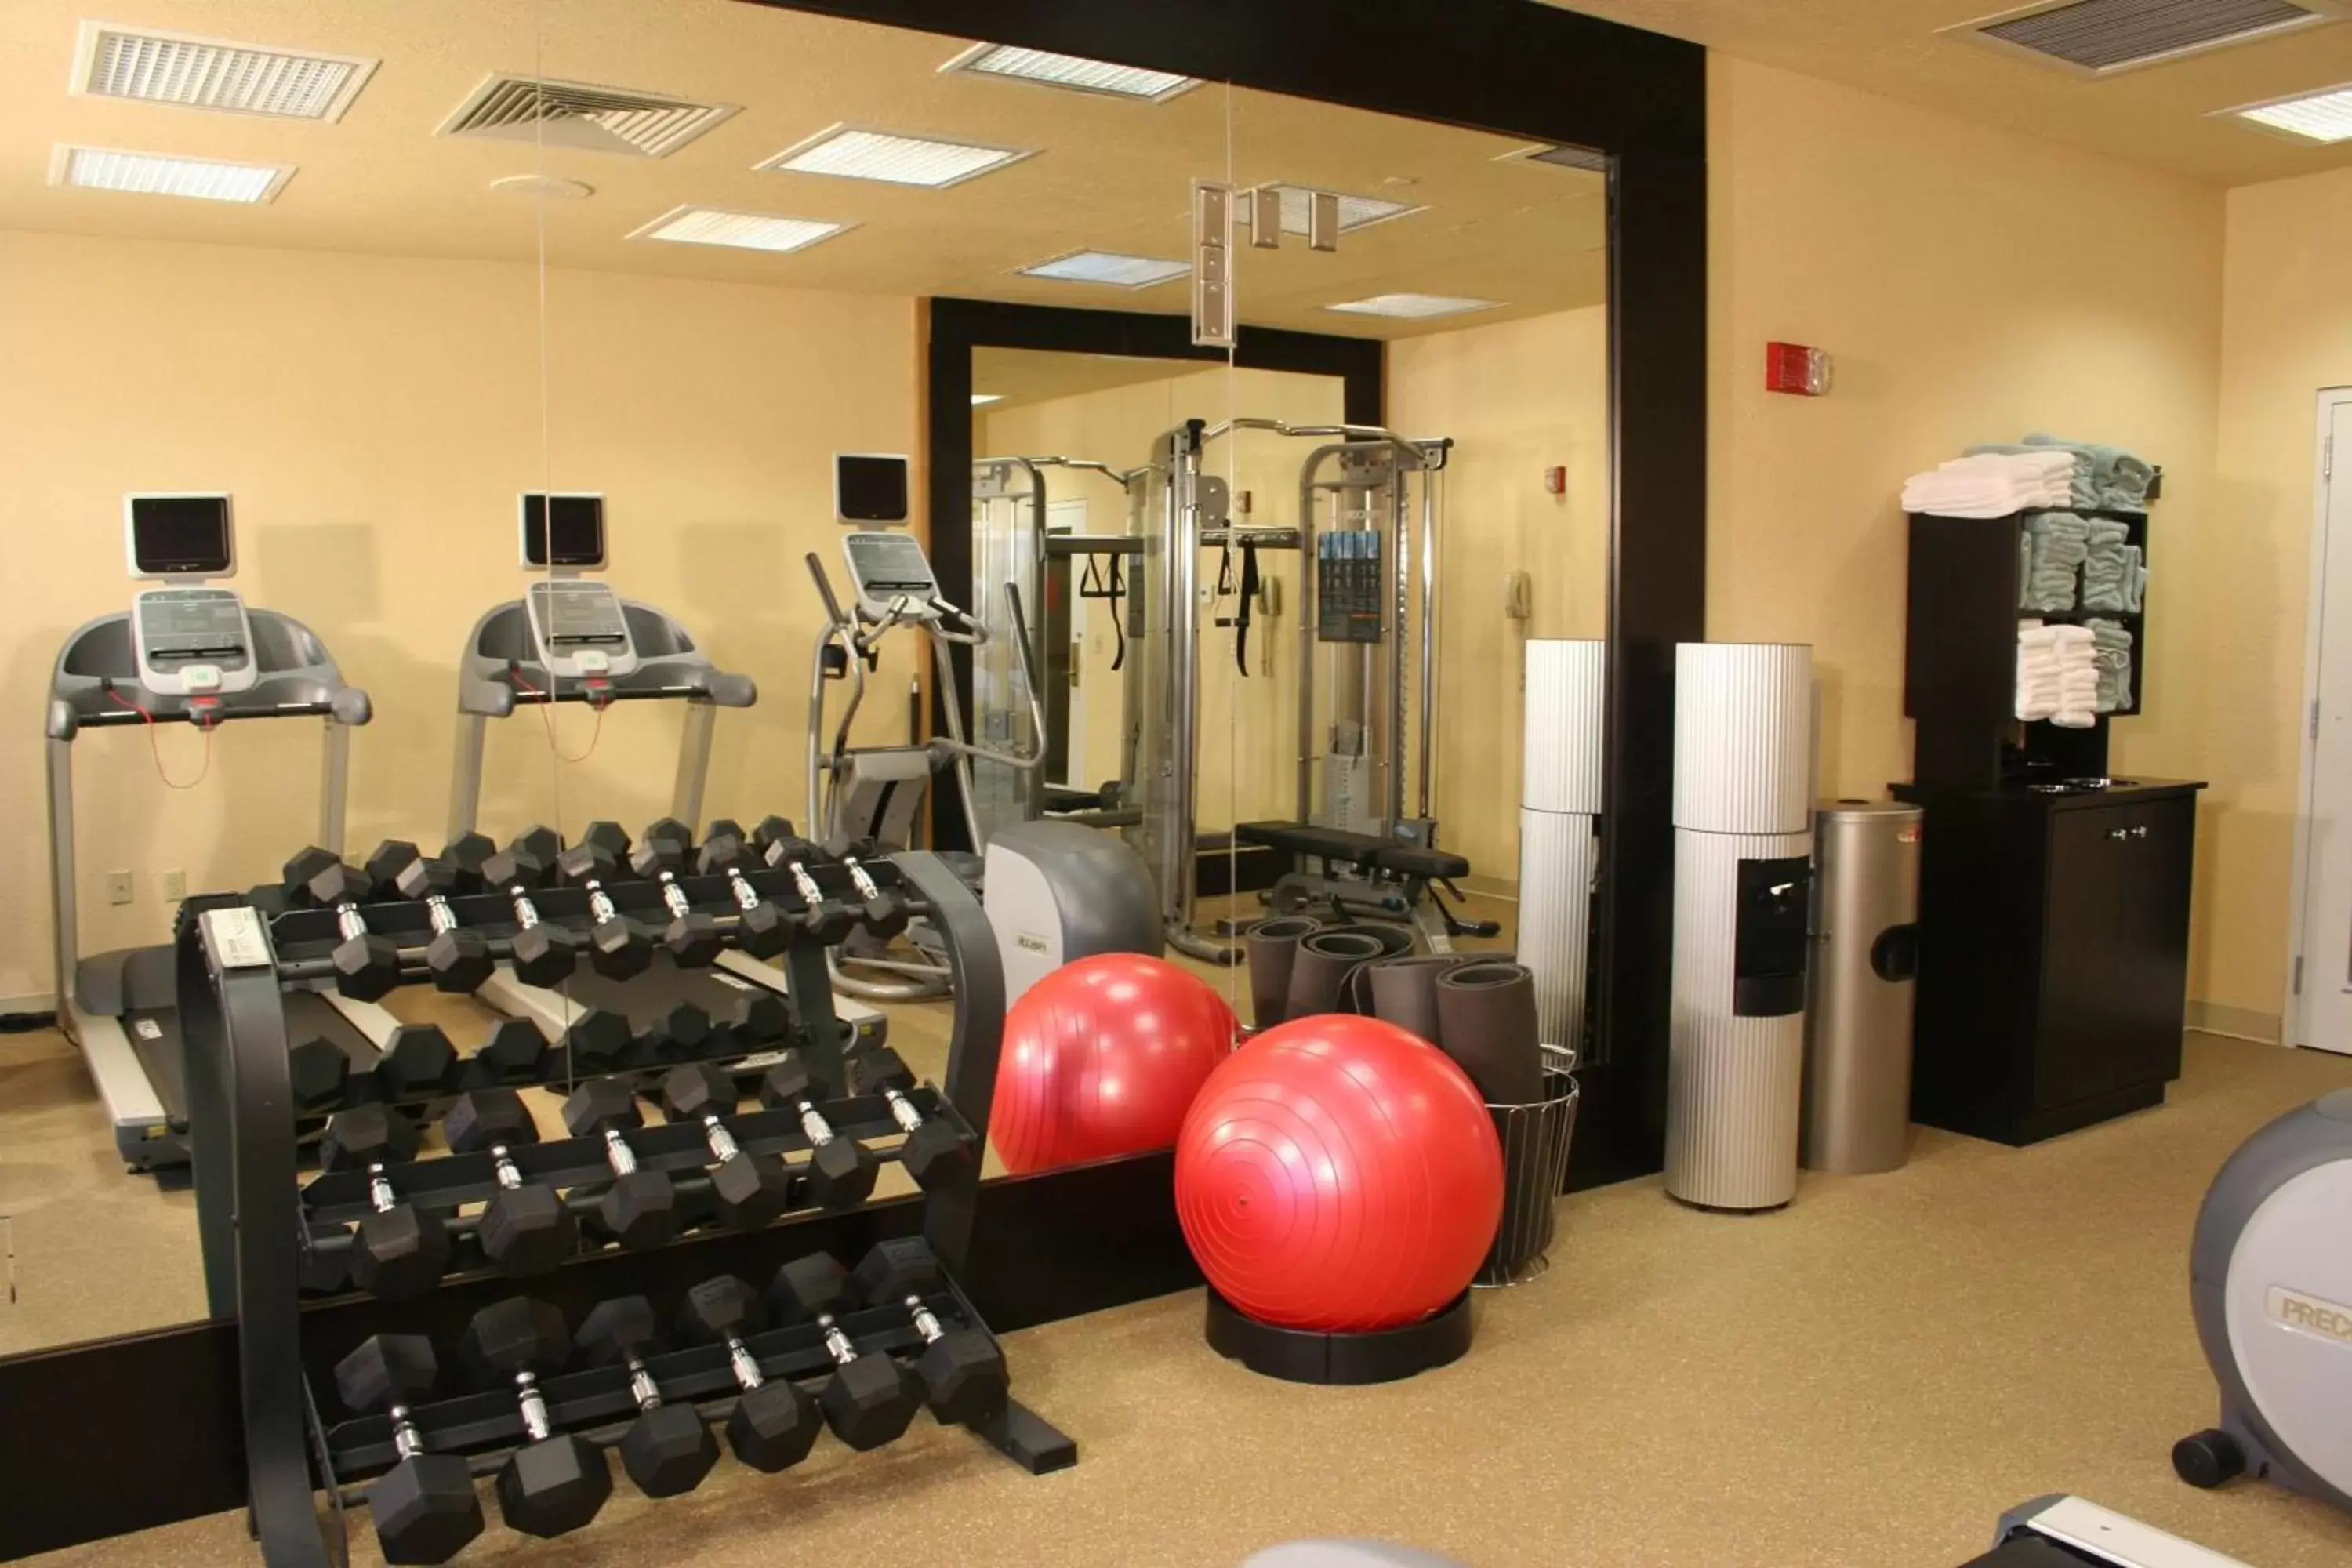 Fitness centre/facilities, Fitness Center/Facilities in Hilton Garden Inn Oklahoma City Airport